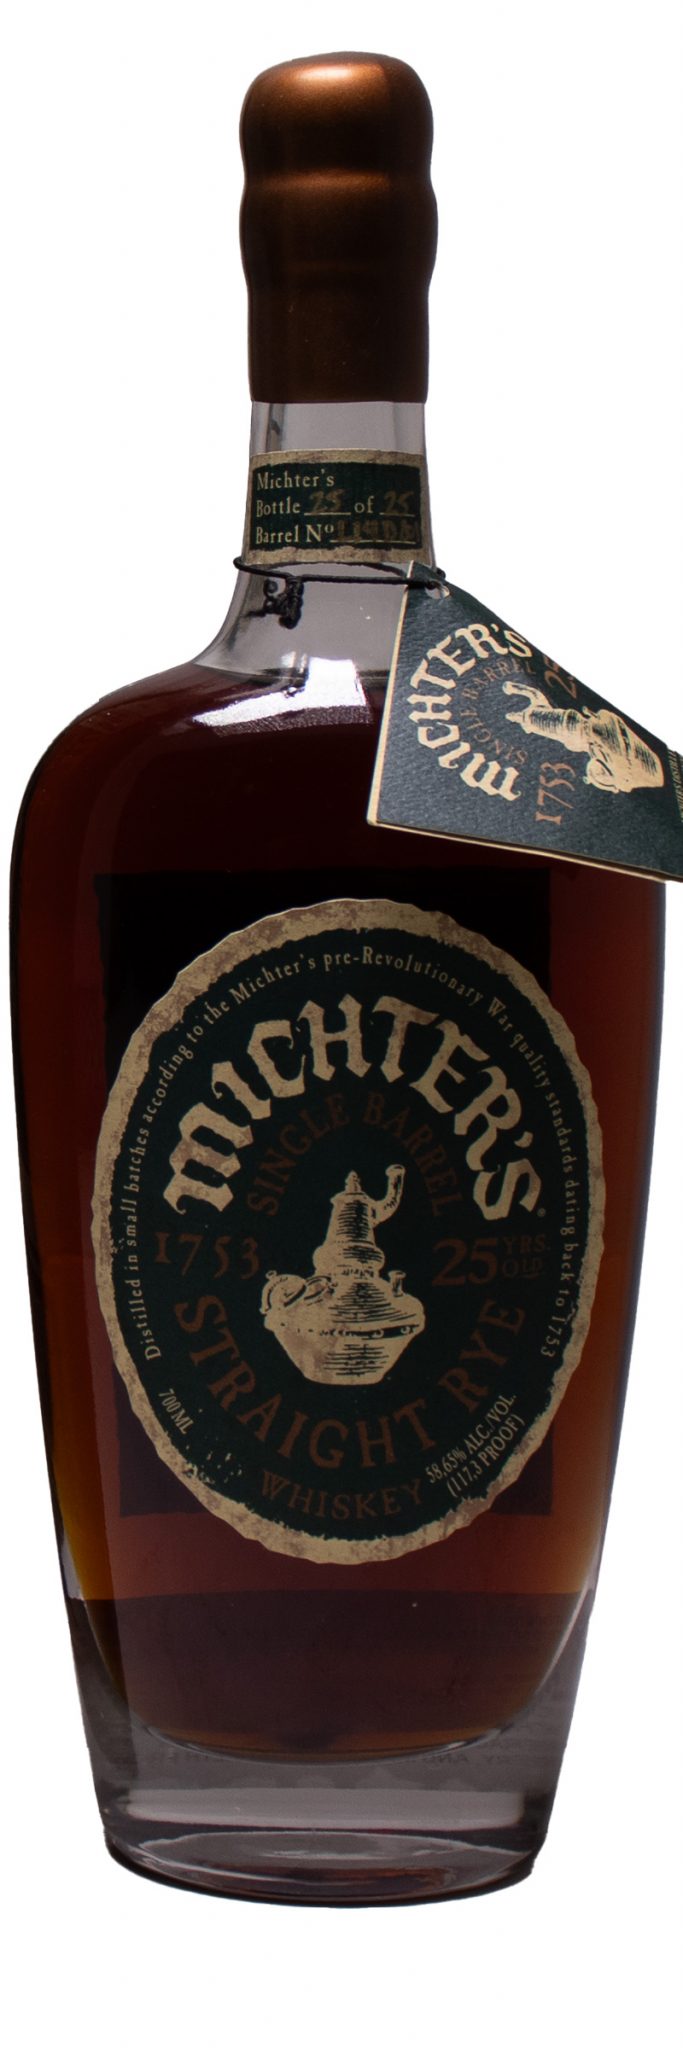 2014 Michter's Rye Whiskey 25 Year Old 750ml